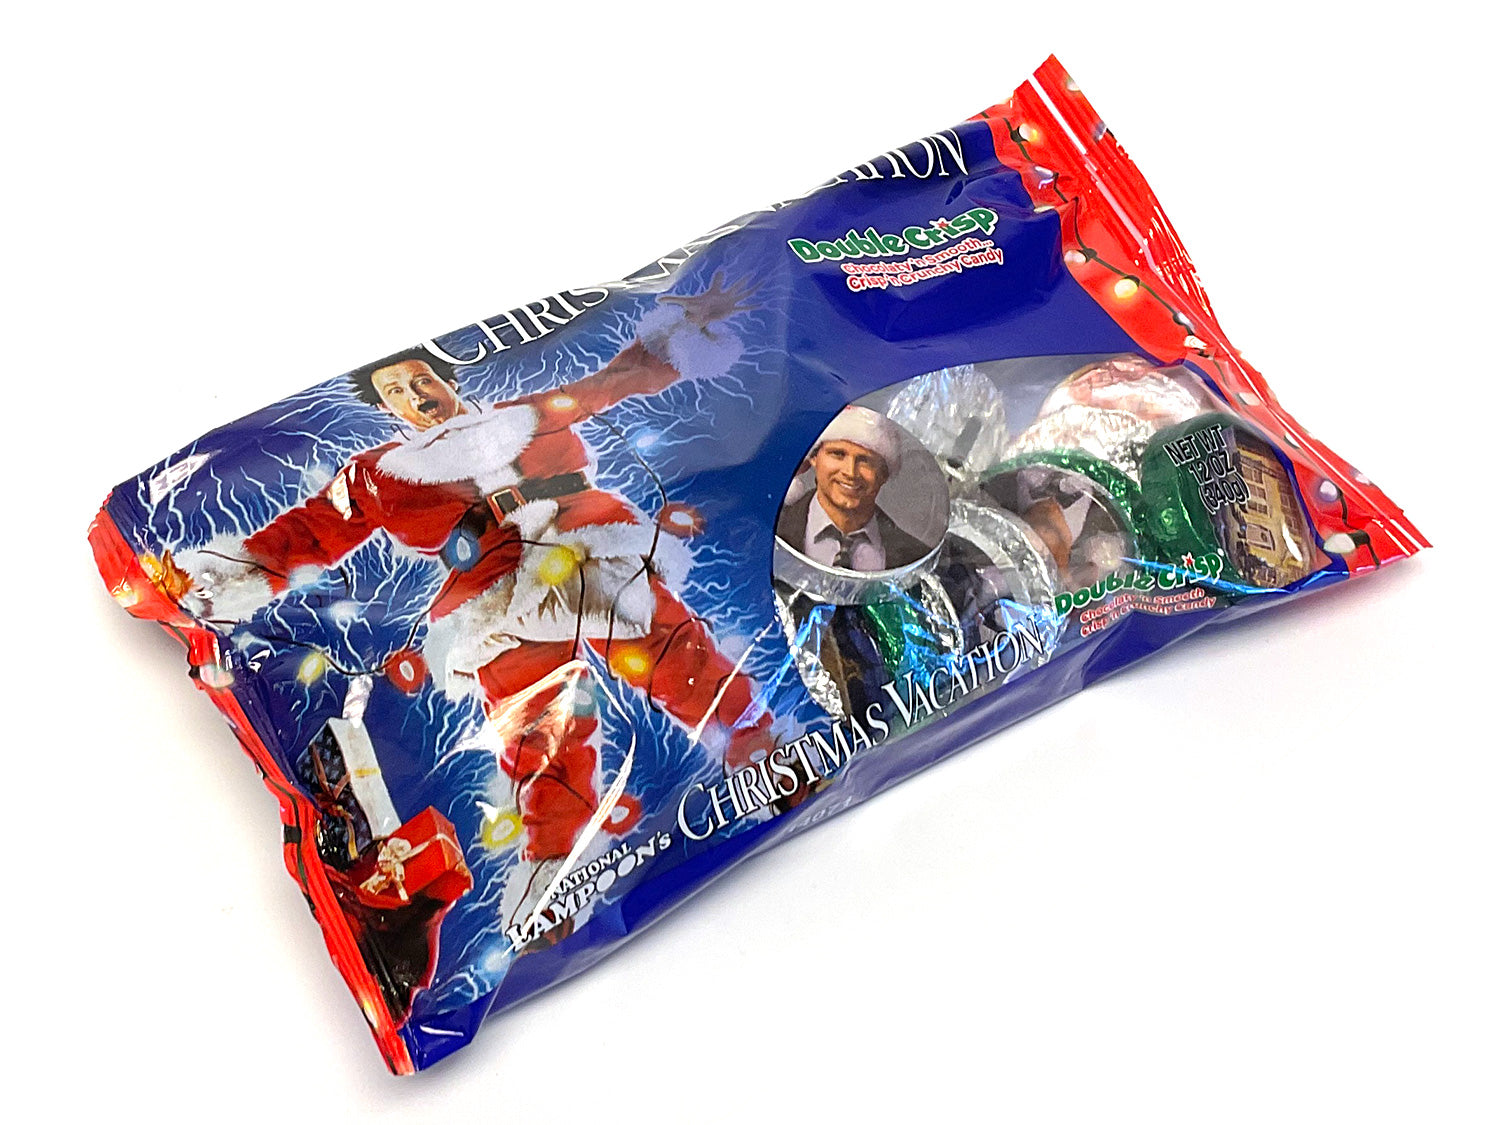 Christmas Vacation Double Crisp Candies - 12 oz bag